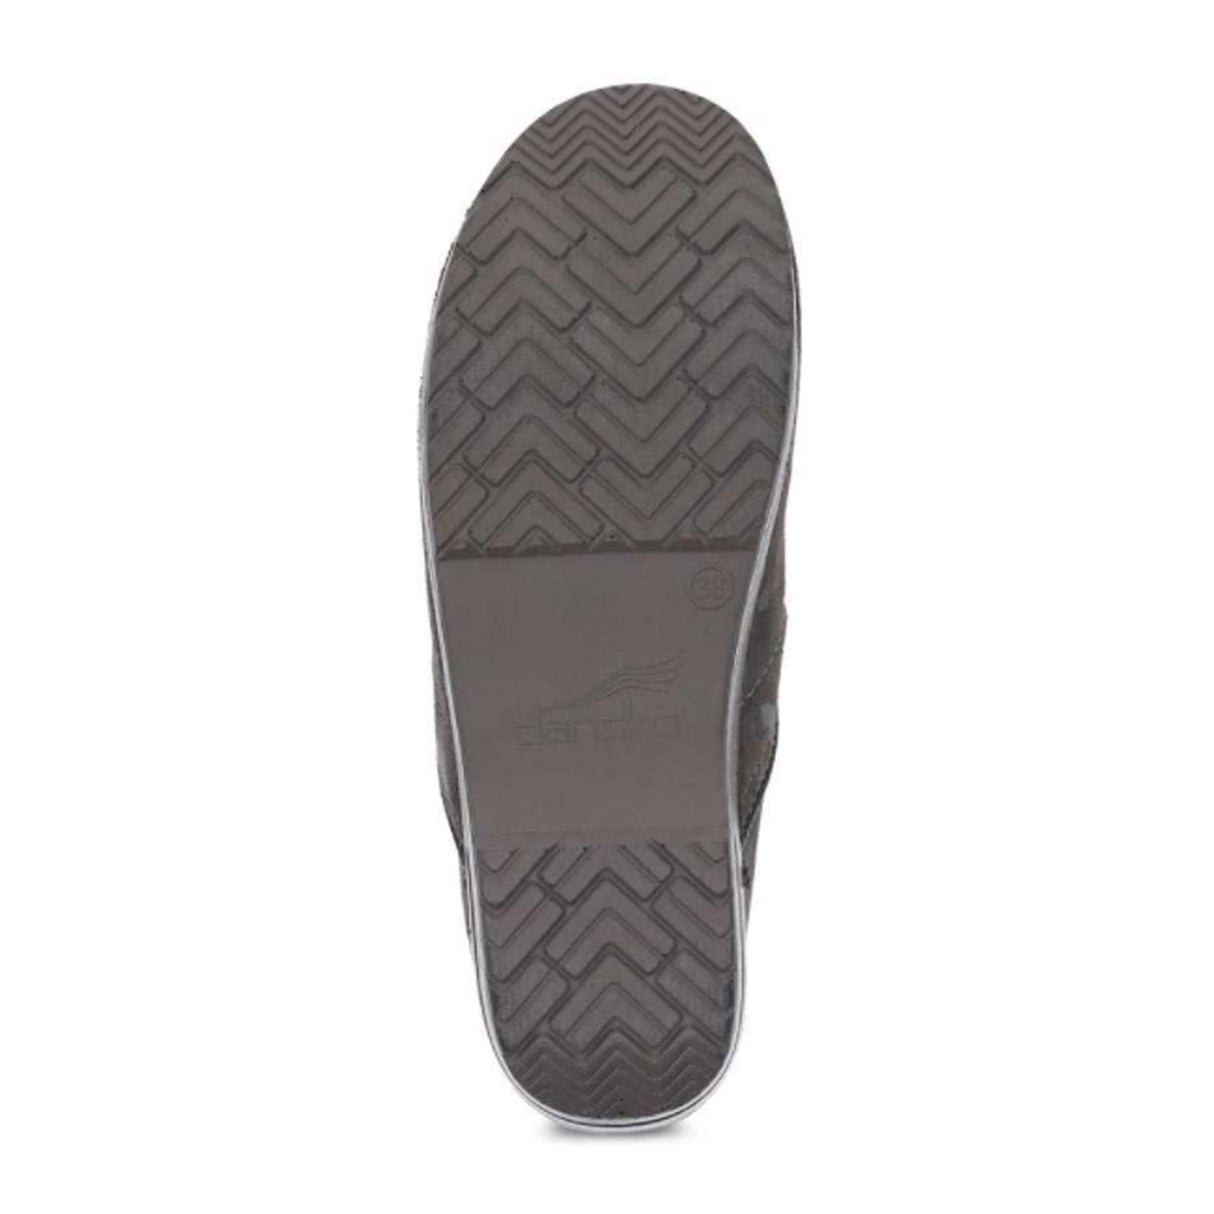 Dansko Professional Clog (Women) - Camo Suede Dress-Casual - Clogs & Mules - The Heel Shoe Fitters